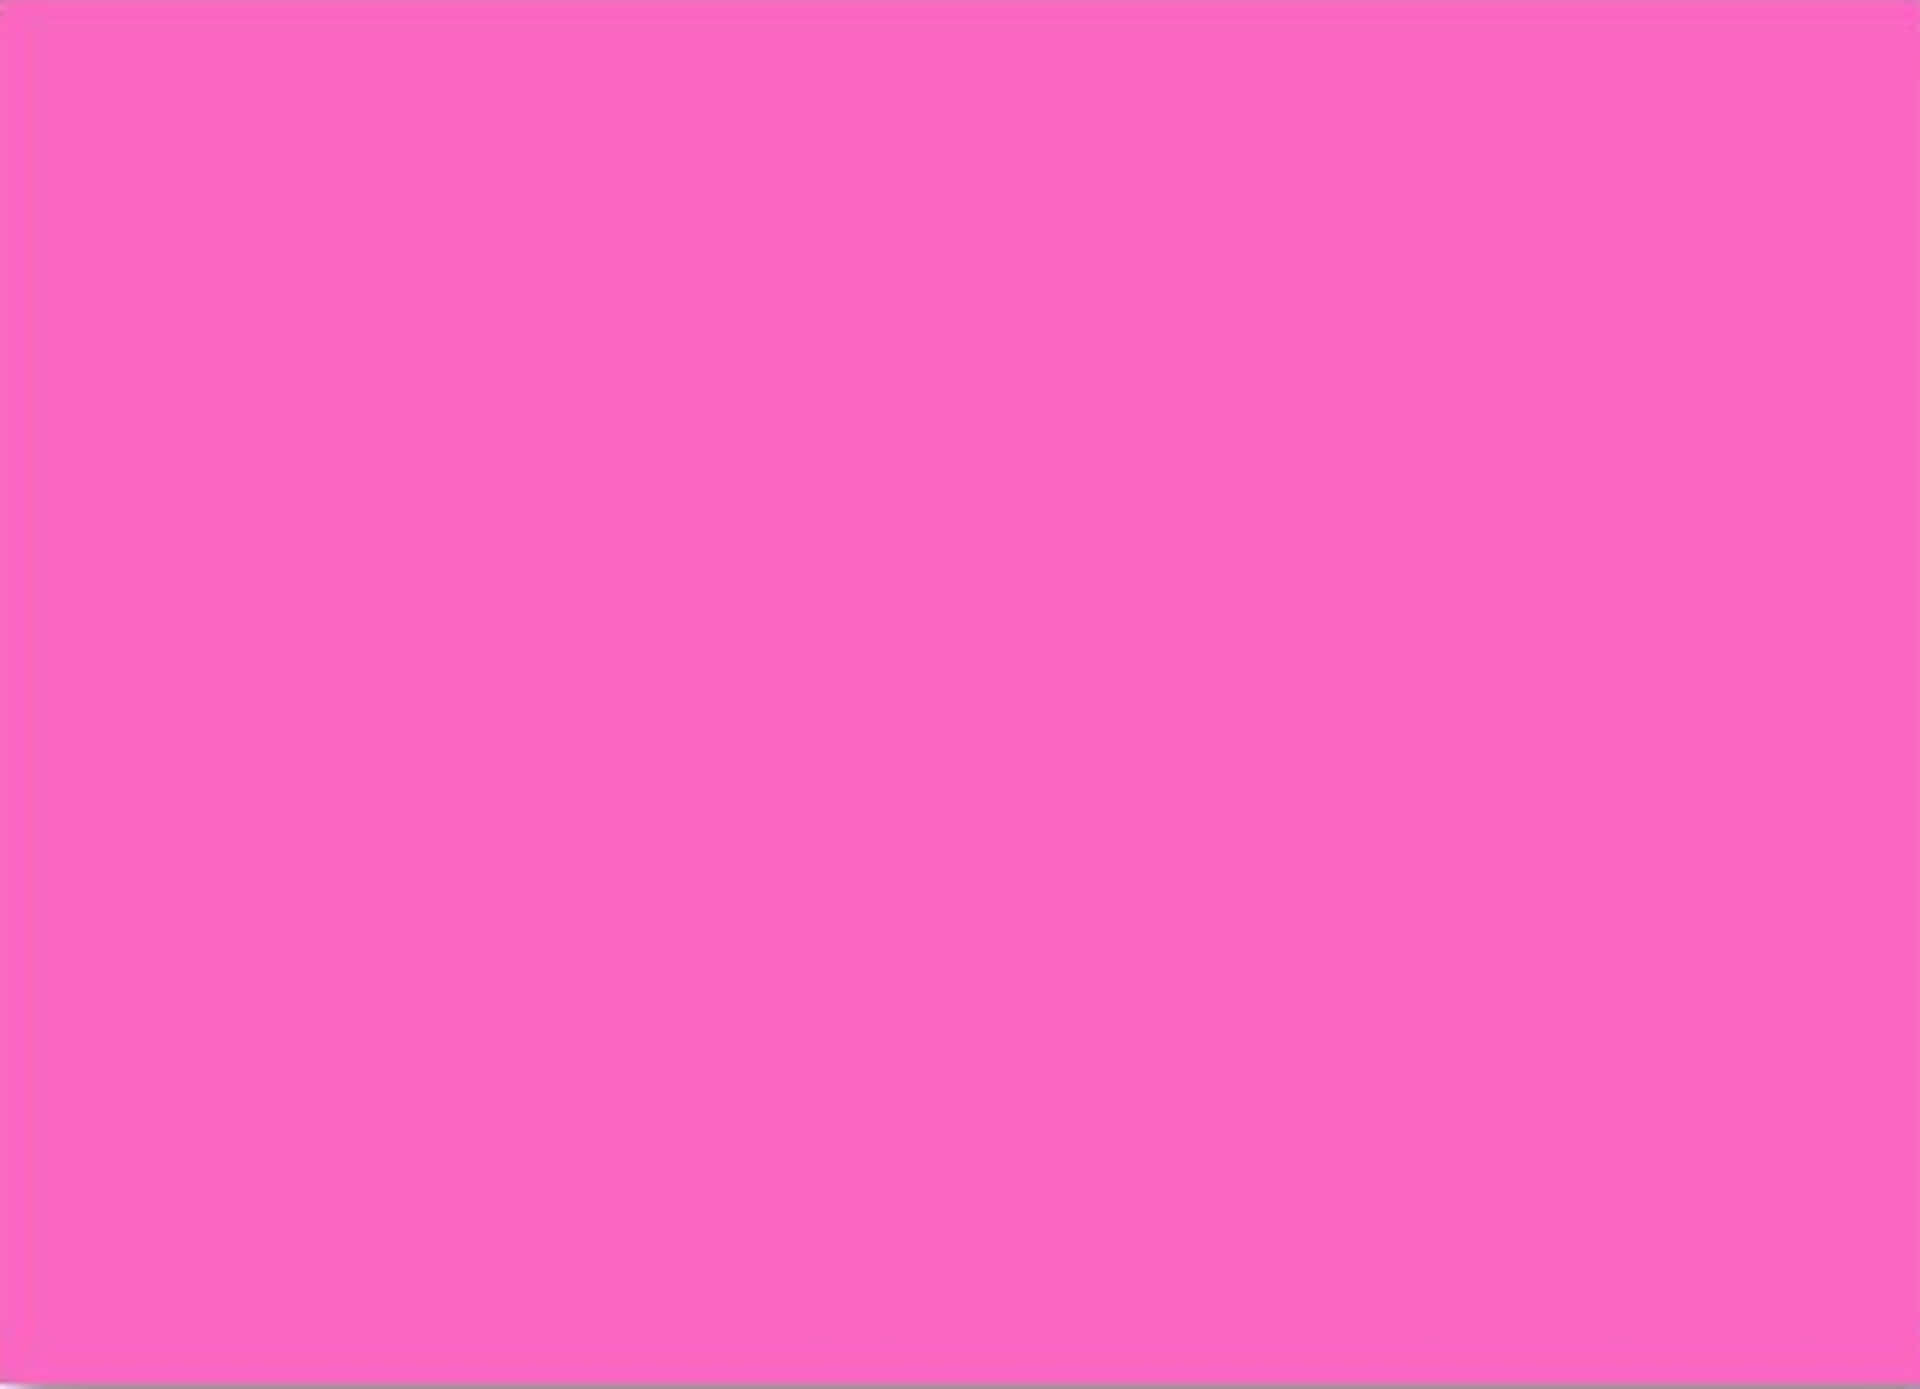 Plain Pink Desktop 7148 X 5173 Wallpaper